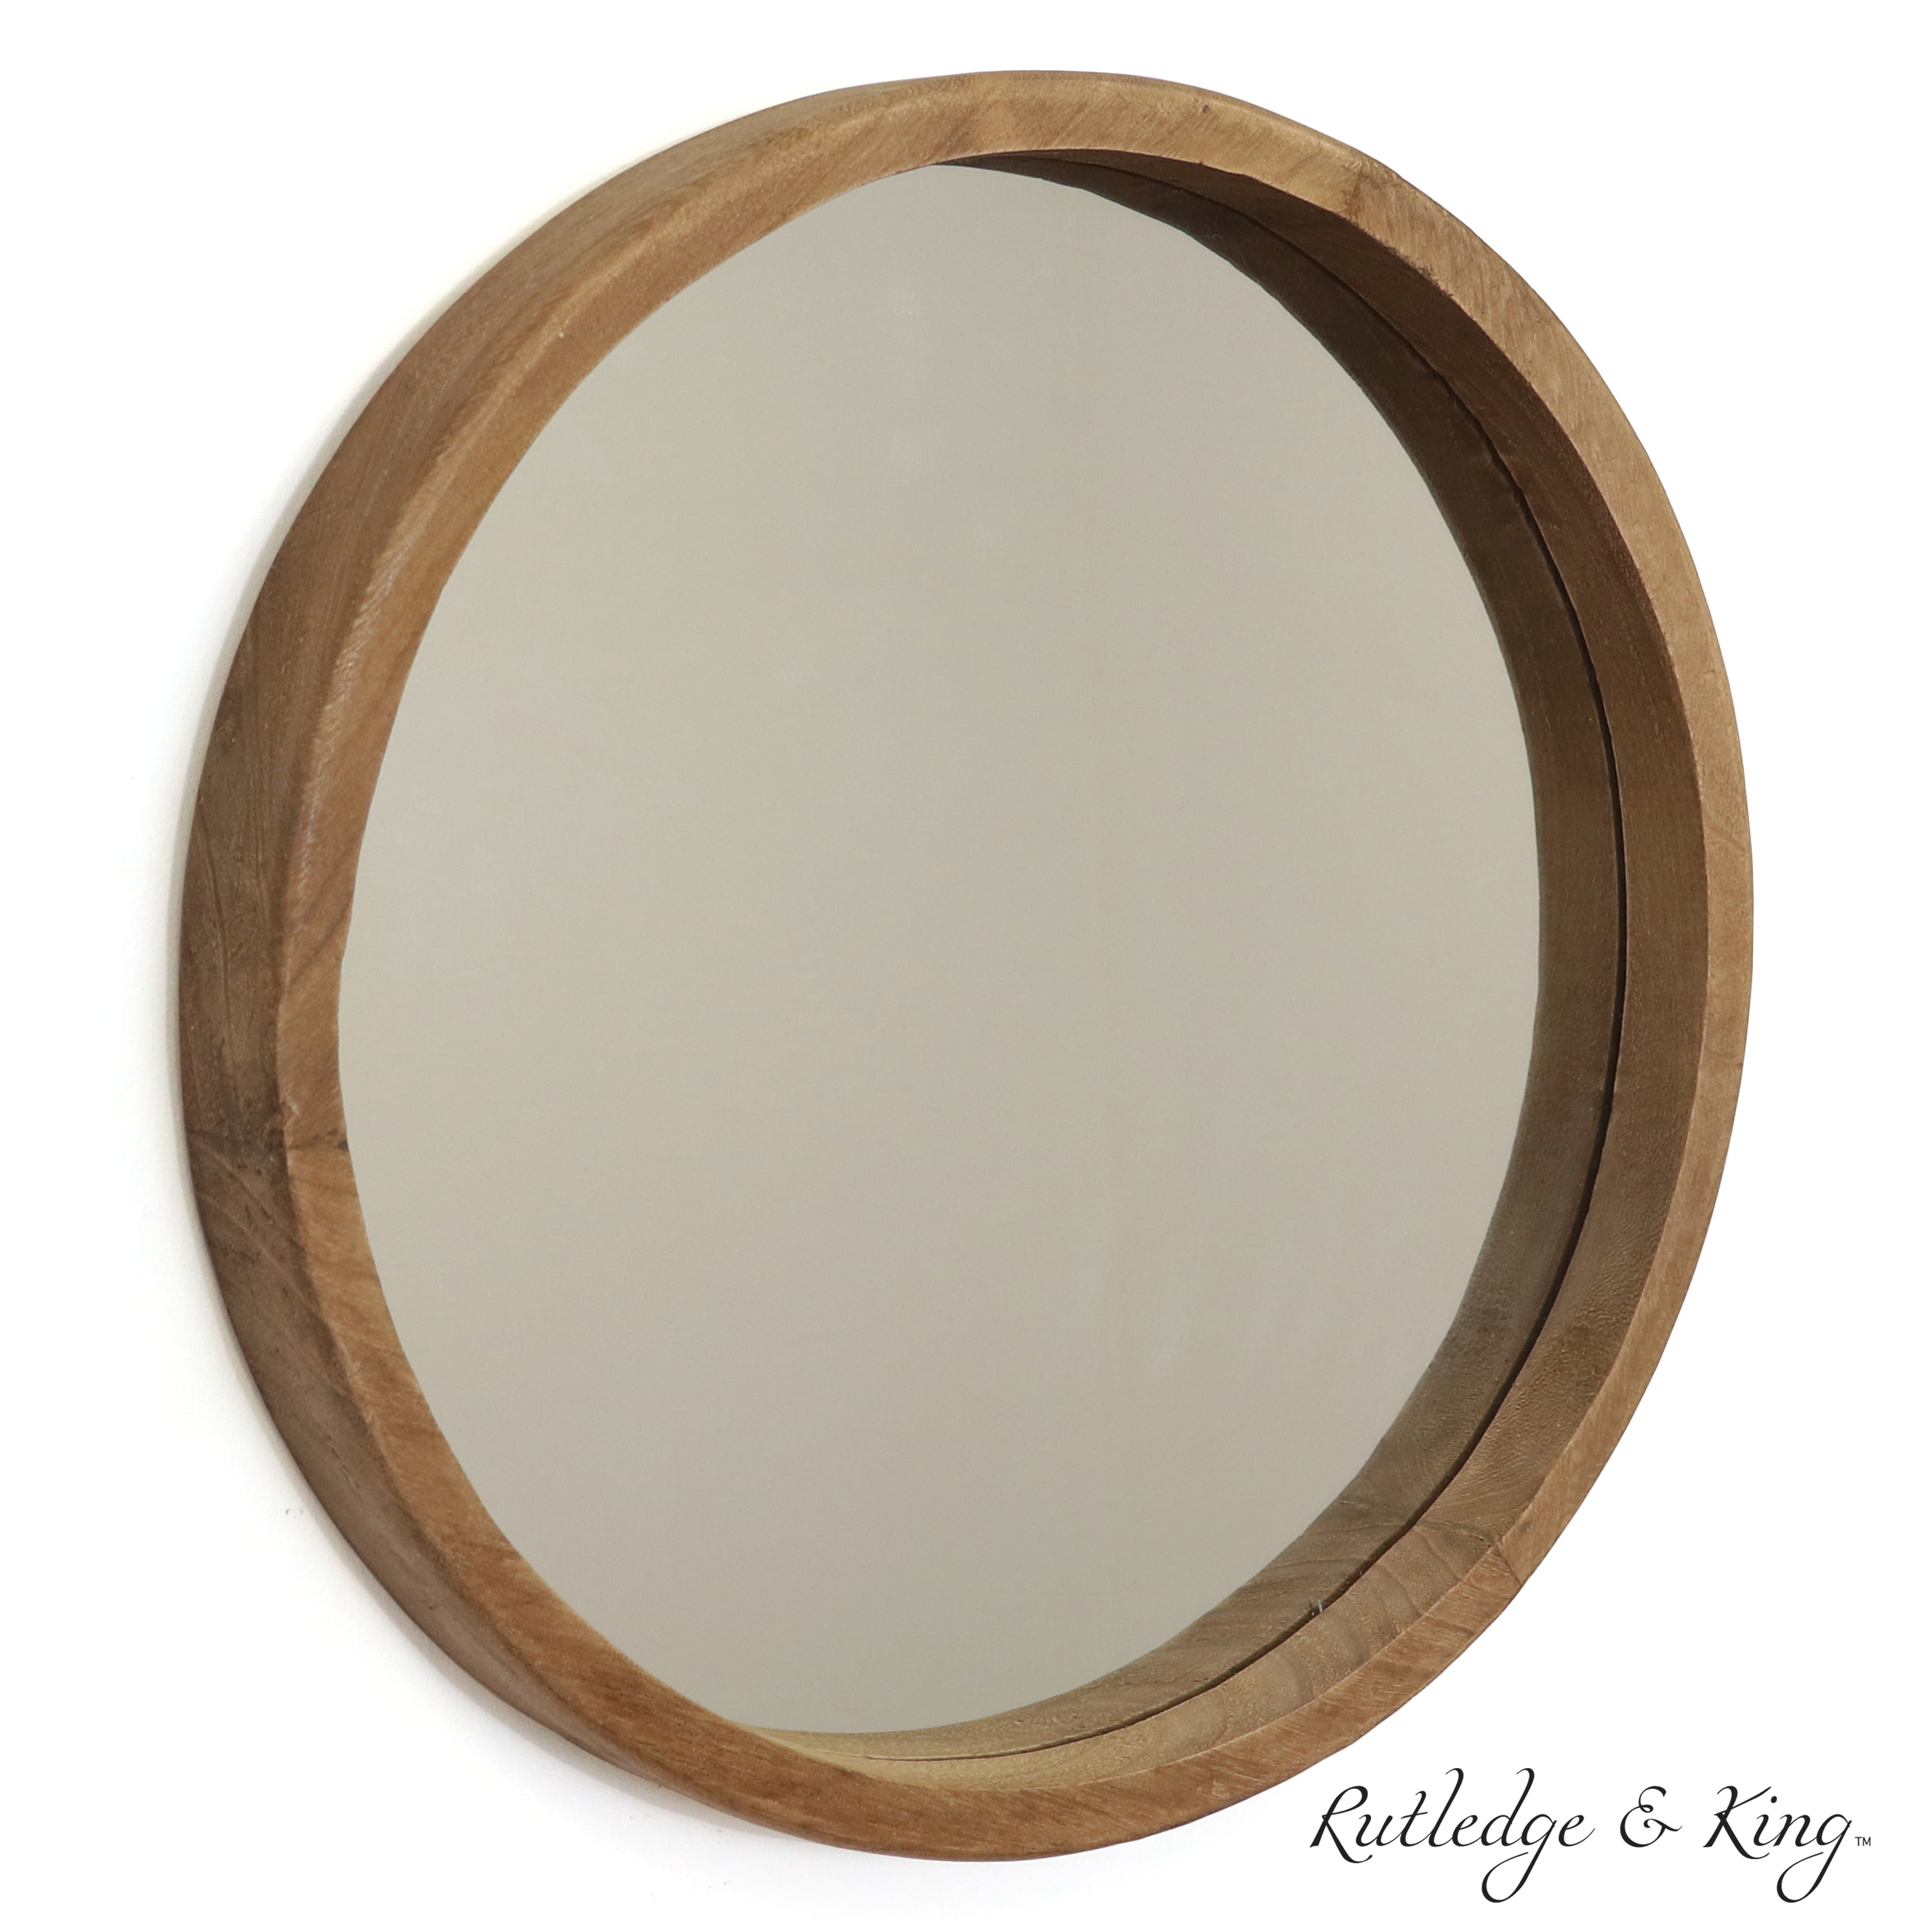 Rutledge King Riverside Wooden Mirror, Large Round Rustic Wood Mirror